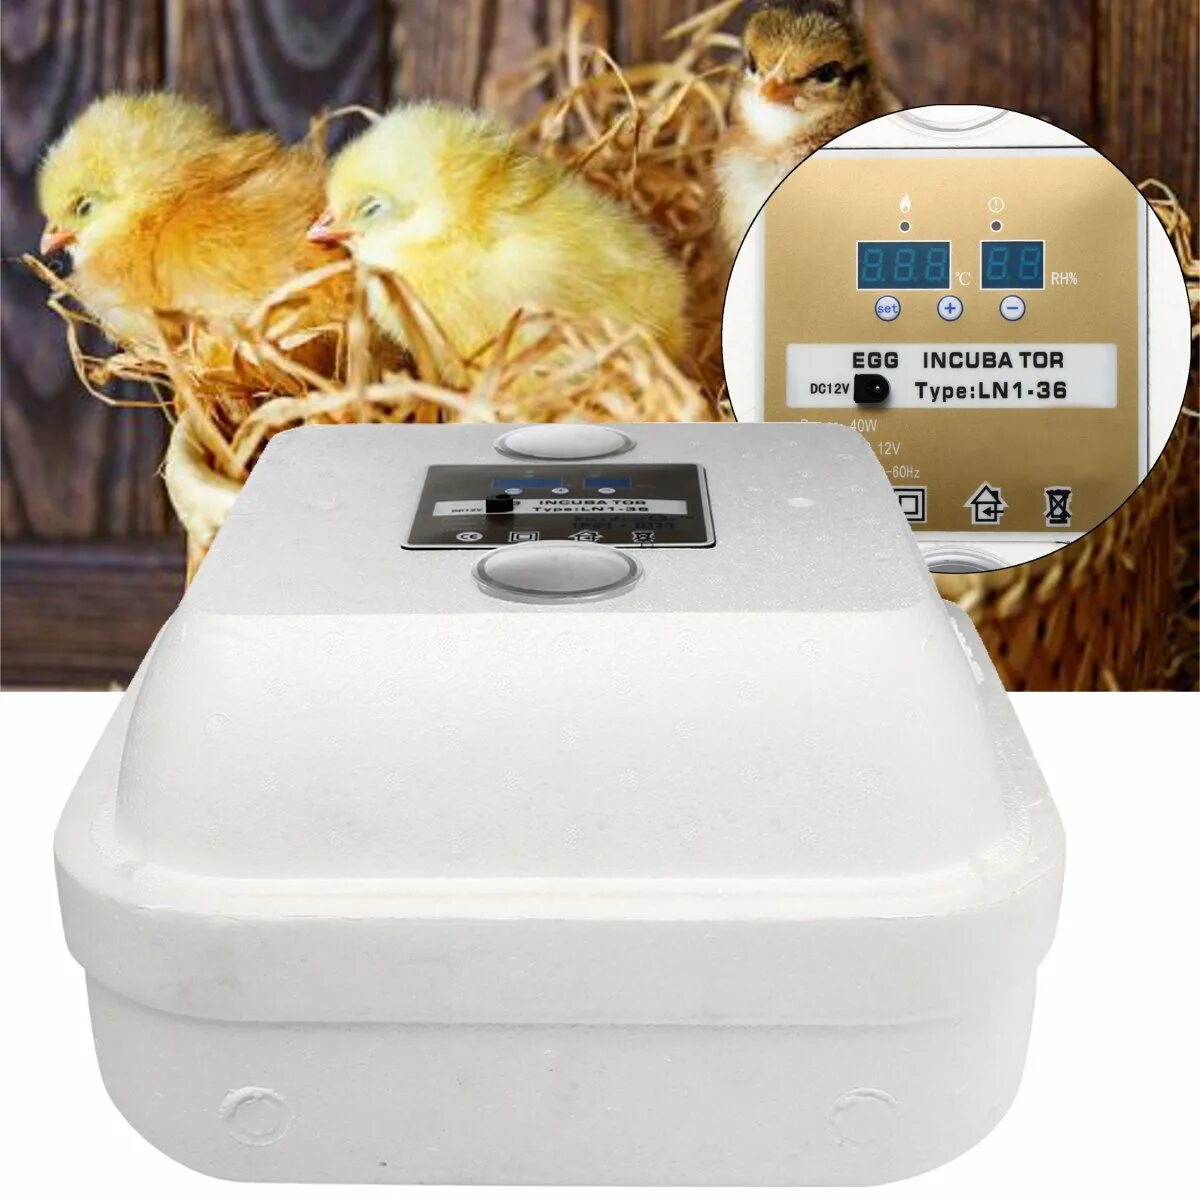 Инкубатор Egg incubator. Автоматический инкубатор яиц Chicken Hatcher. Инкубатор птичий двор а-64. Dc12v / ac220v инкубатор для курицы.